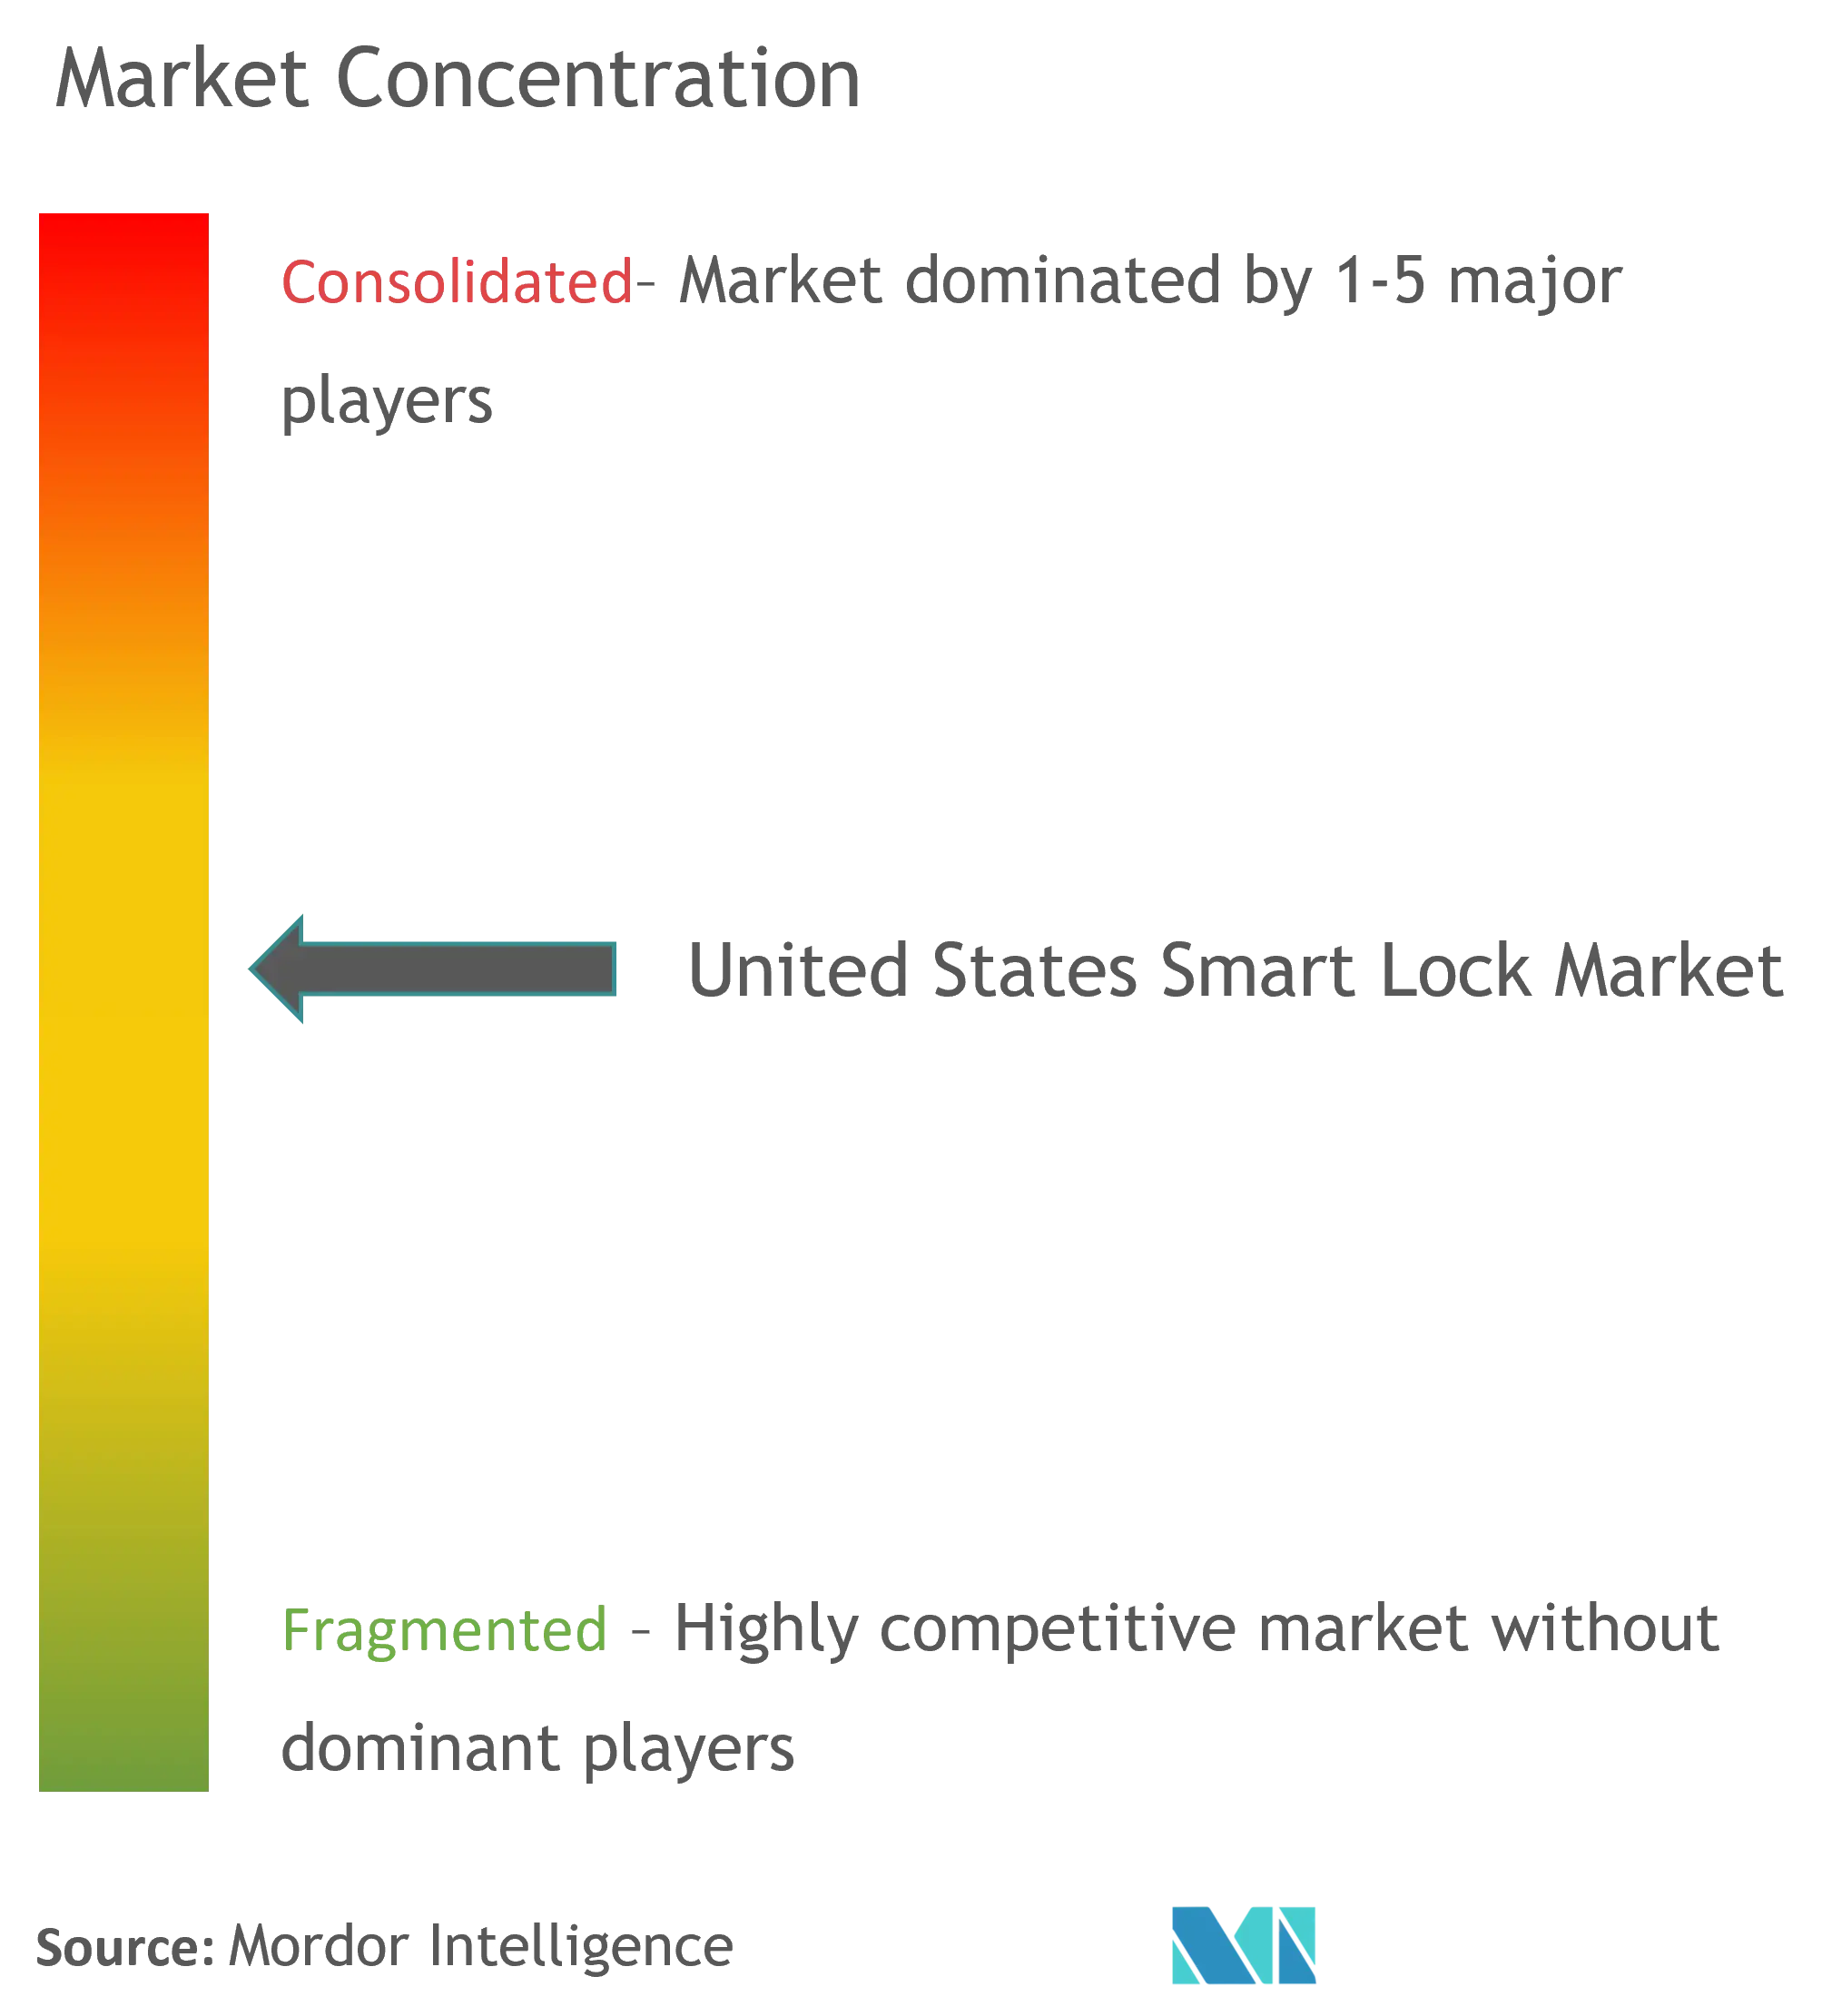 United States Smart Lock Market Concentration